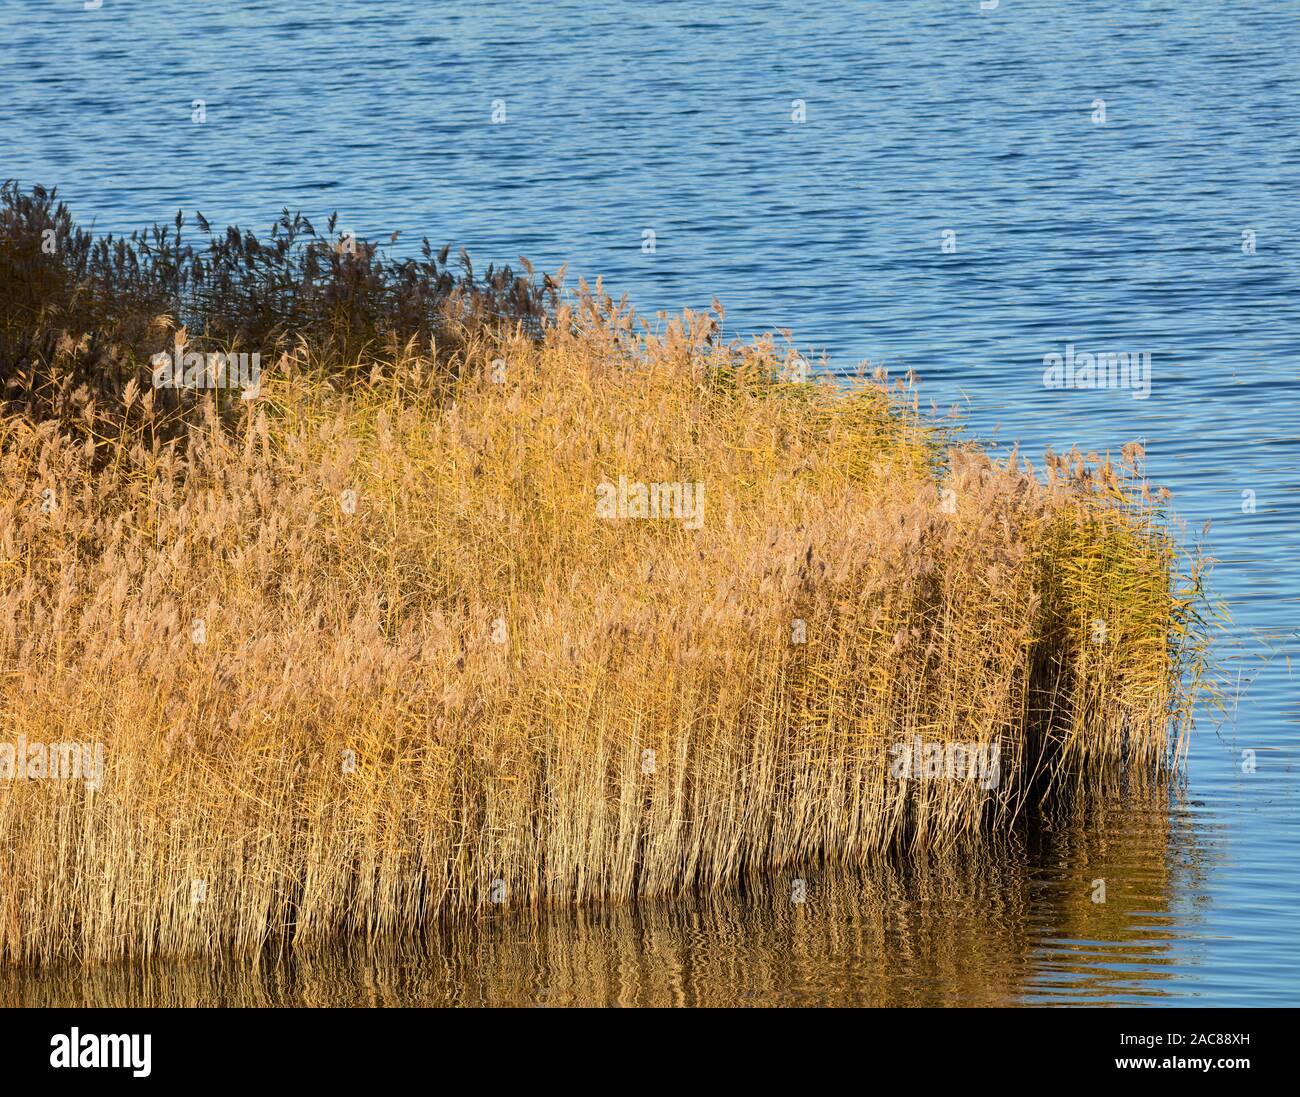 Grass sticking from water in Bogesundslandet, near Vaxholm, Sweden Stock Photo